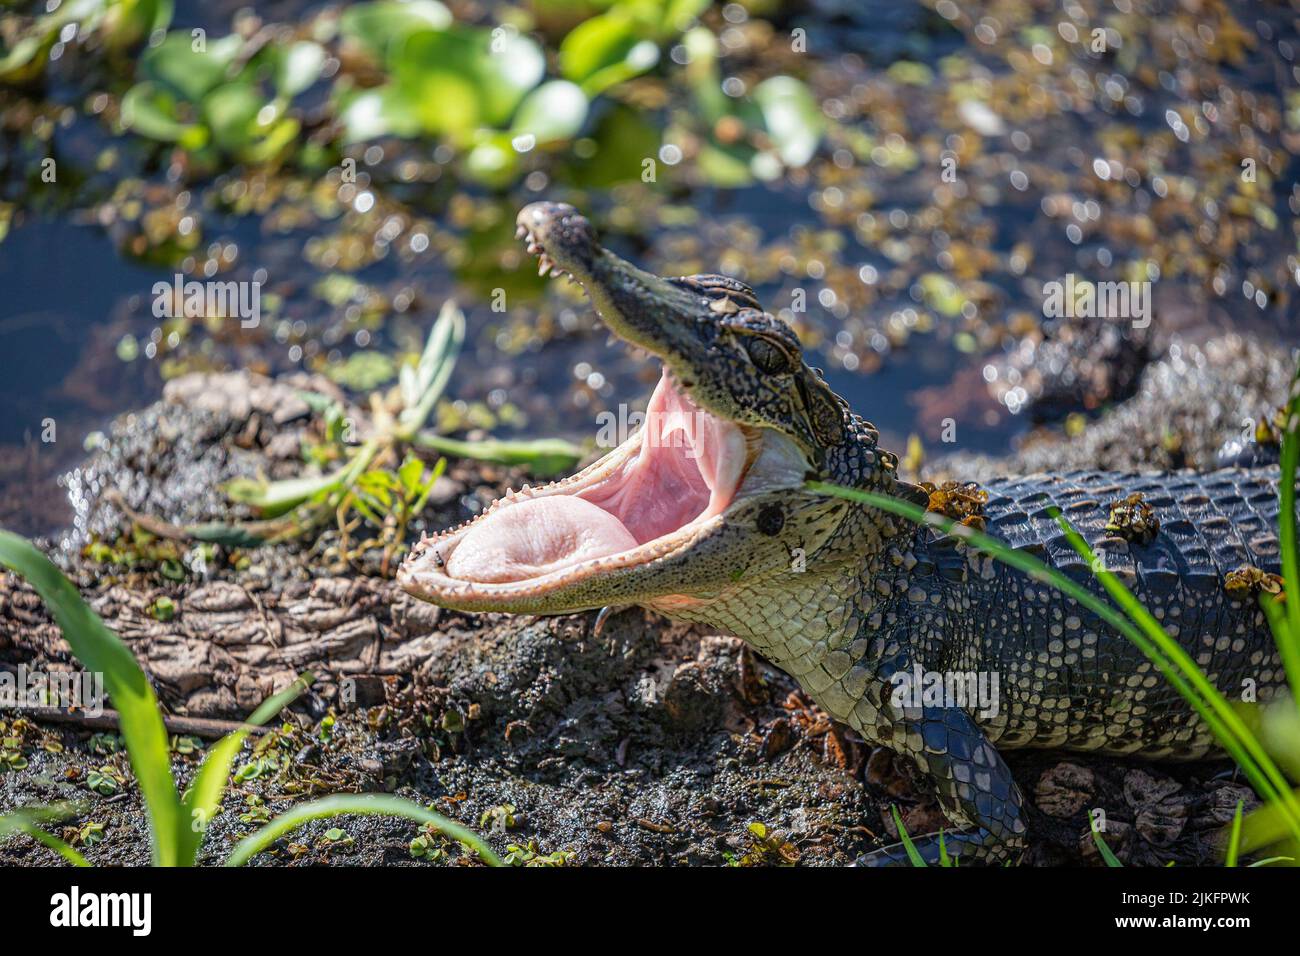 A small crocodile roaring in the swamp Stock Photo